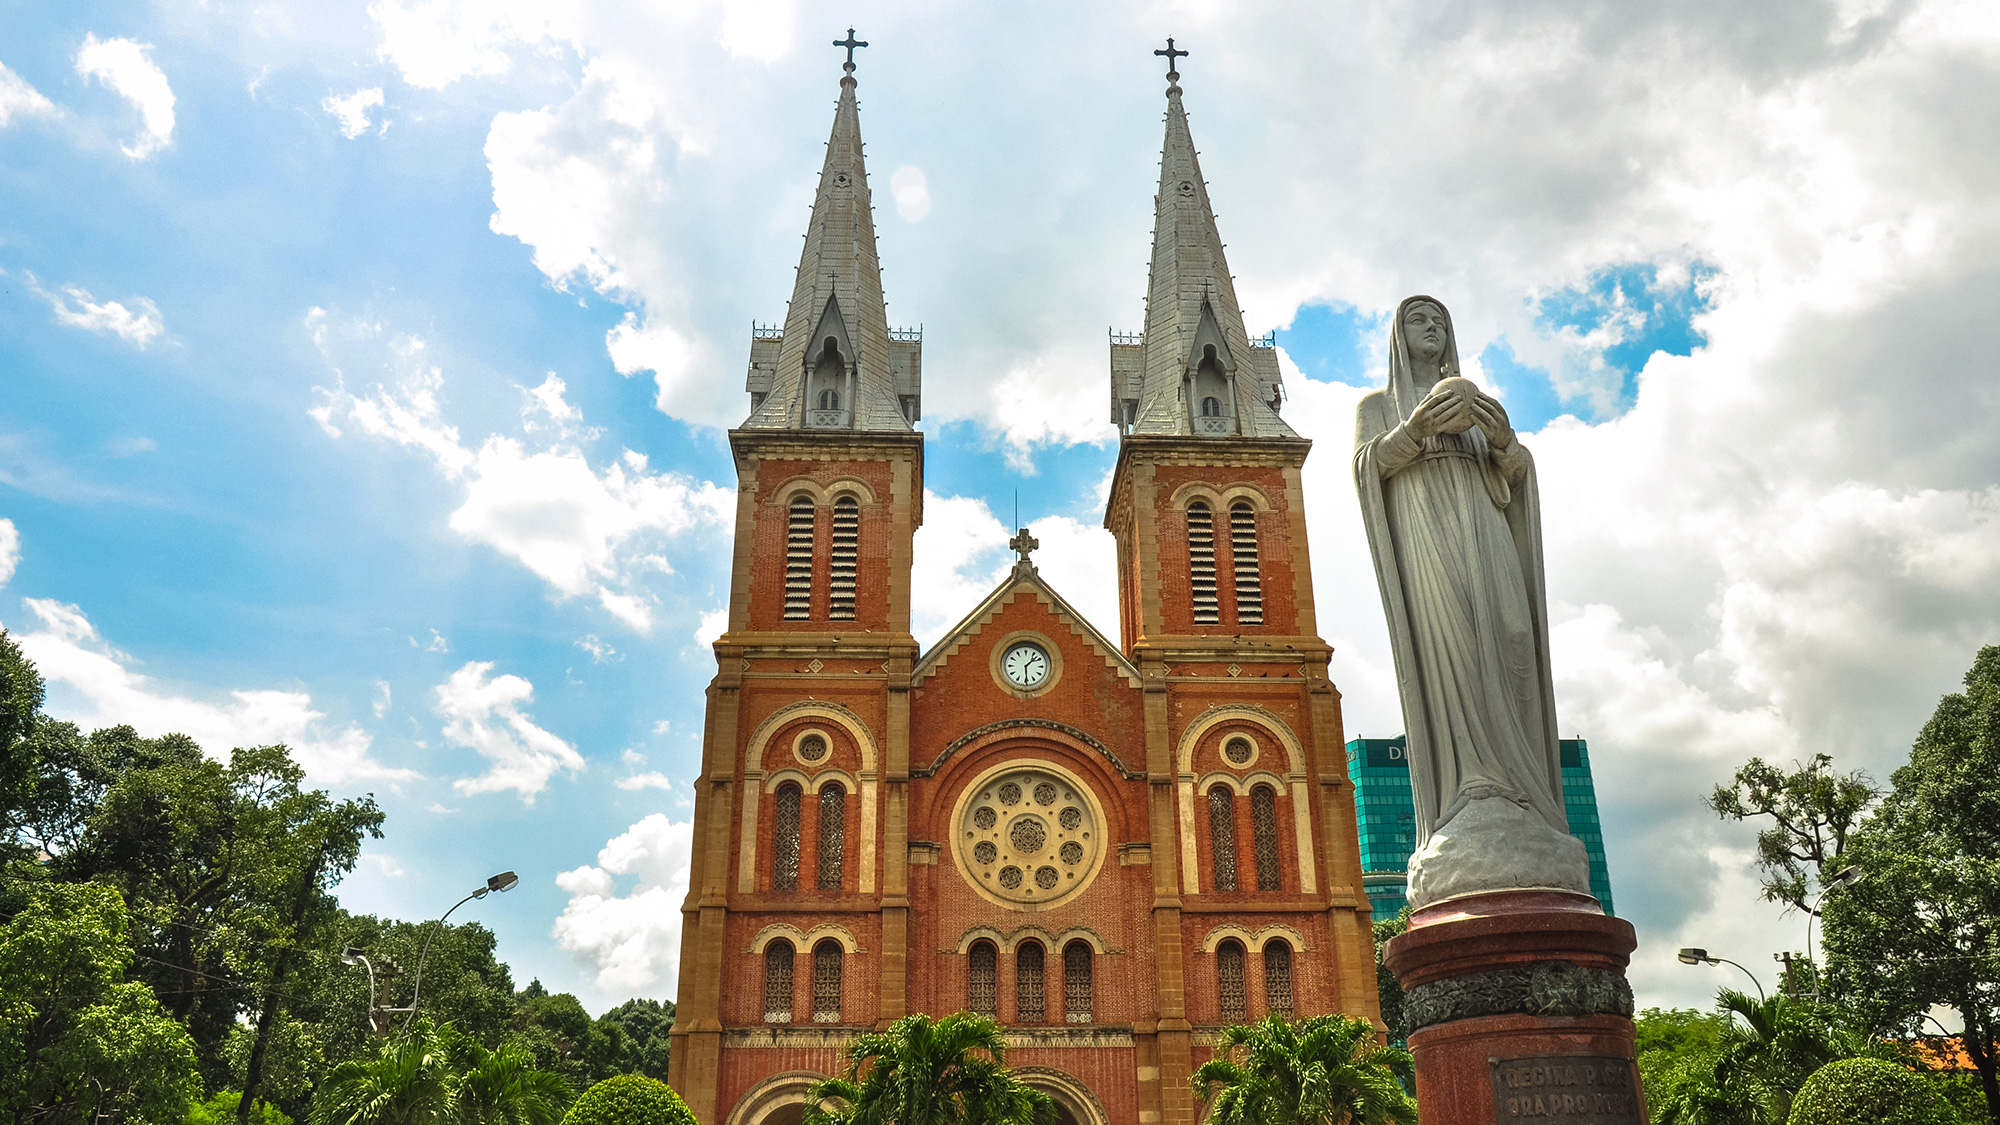 Saigon Notre Dame Cathedral - Ho Chi Minh City